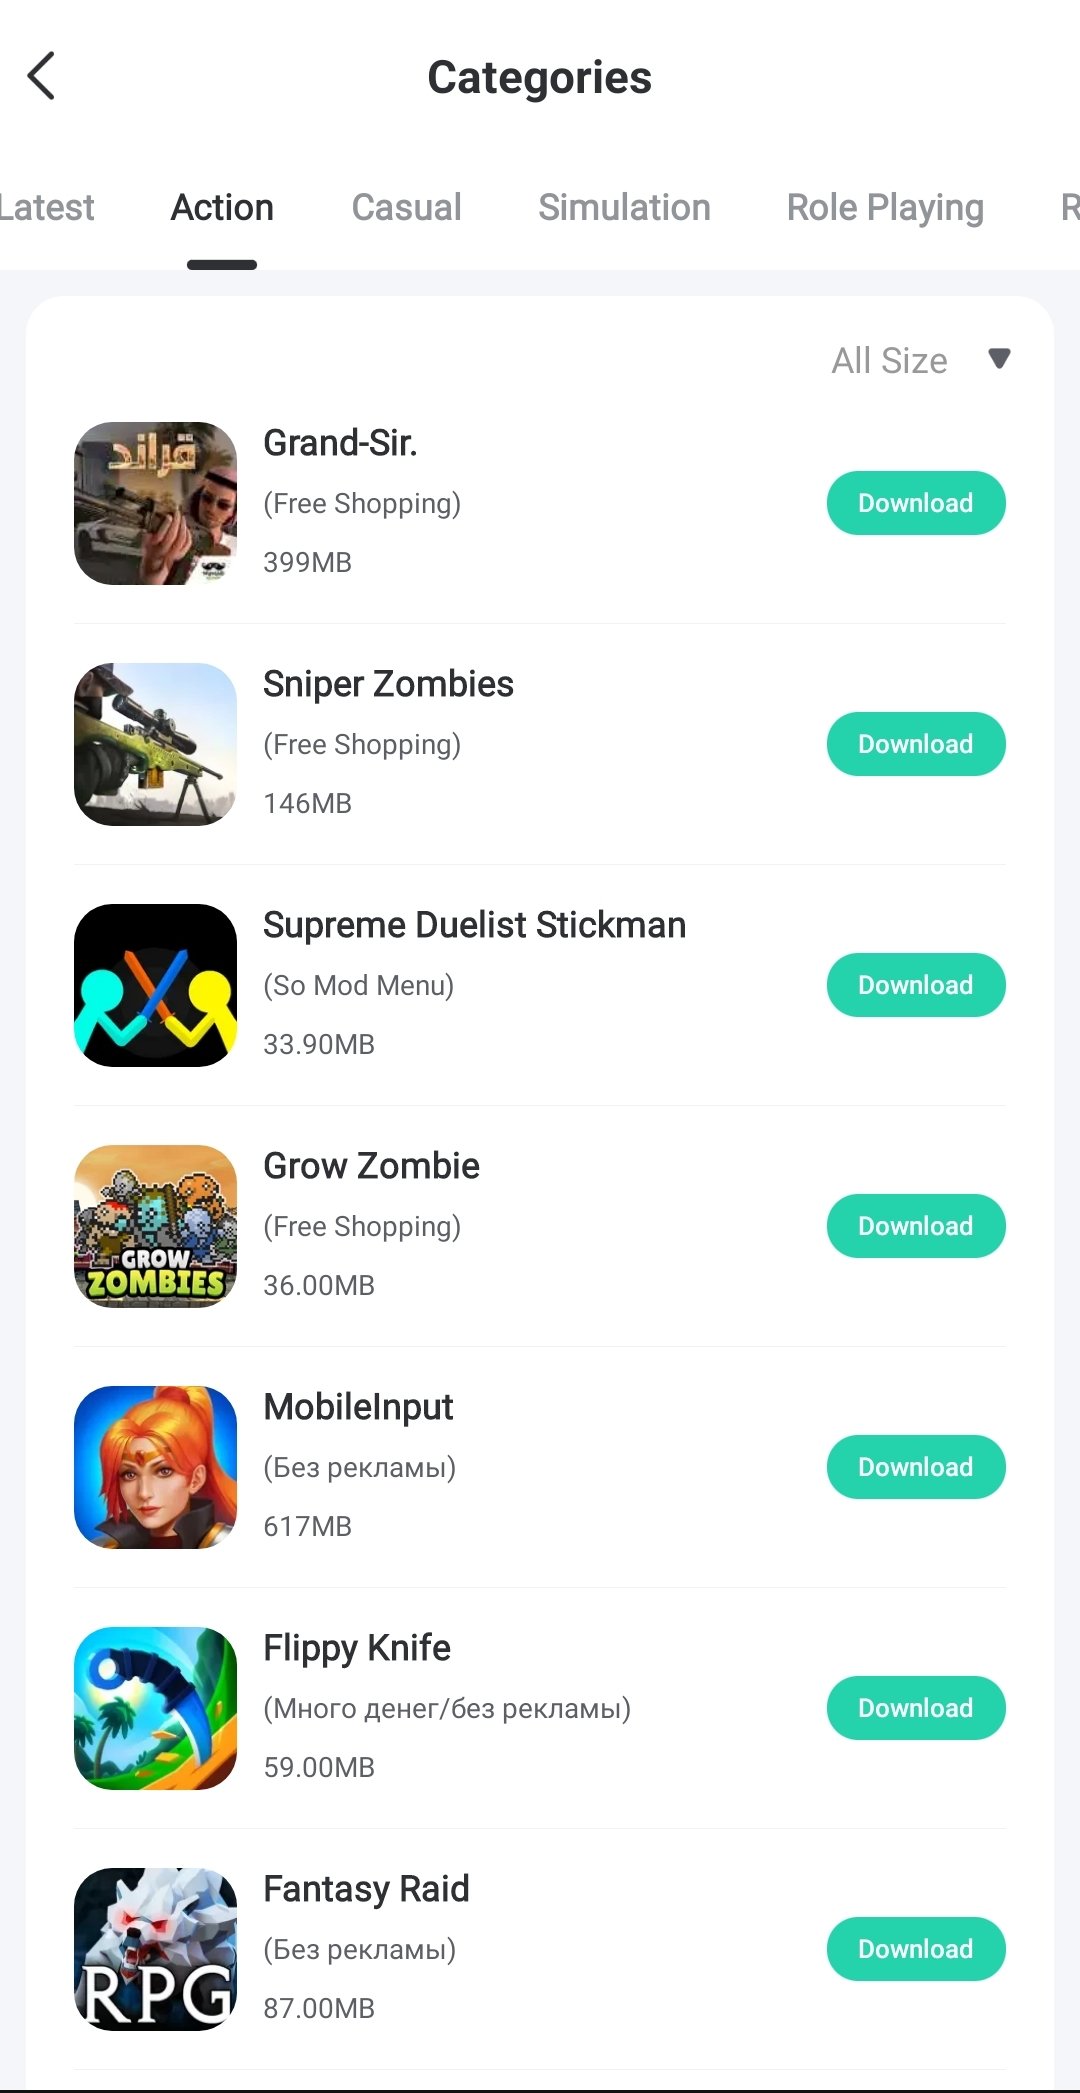 Como BAIXAR jogos e apps modificados pelo Appvn Android 